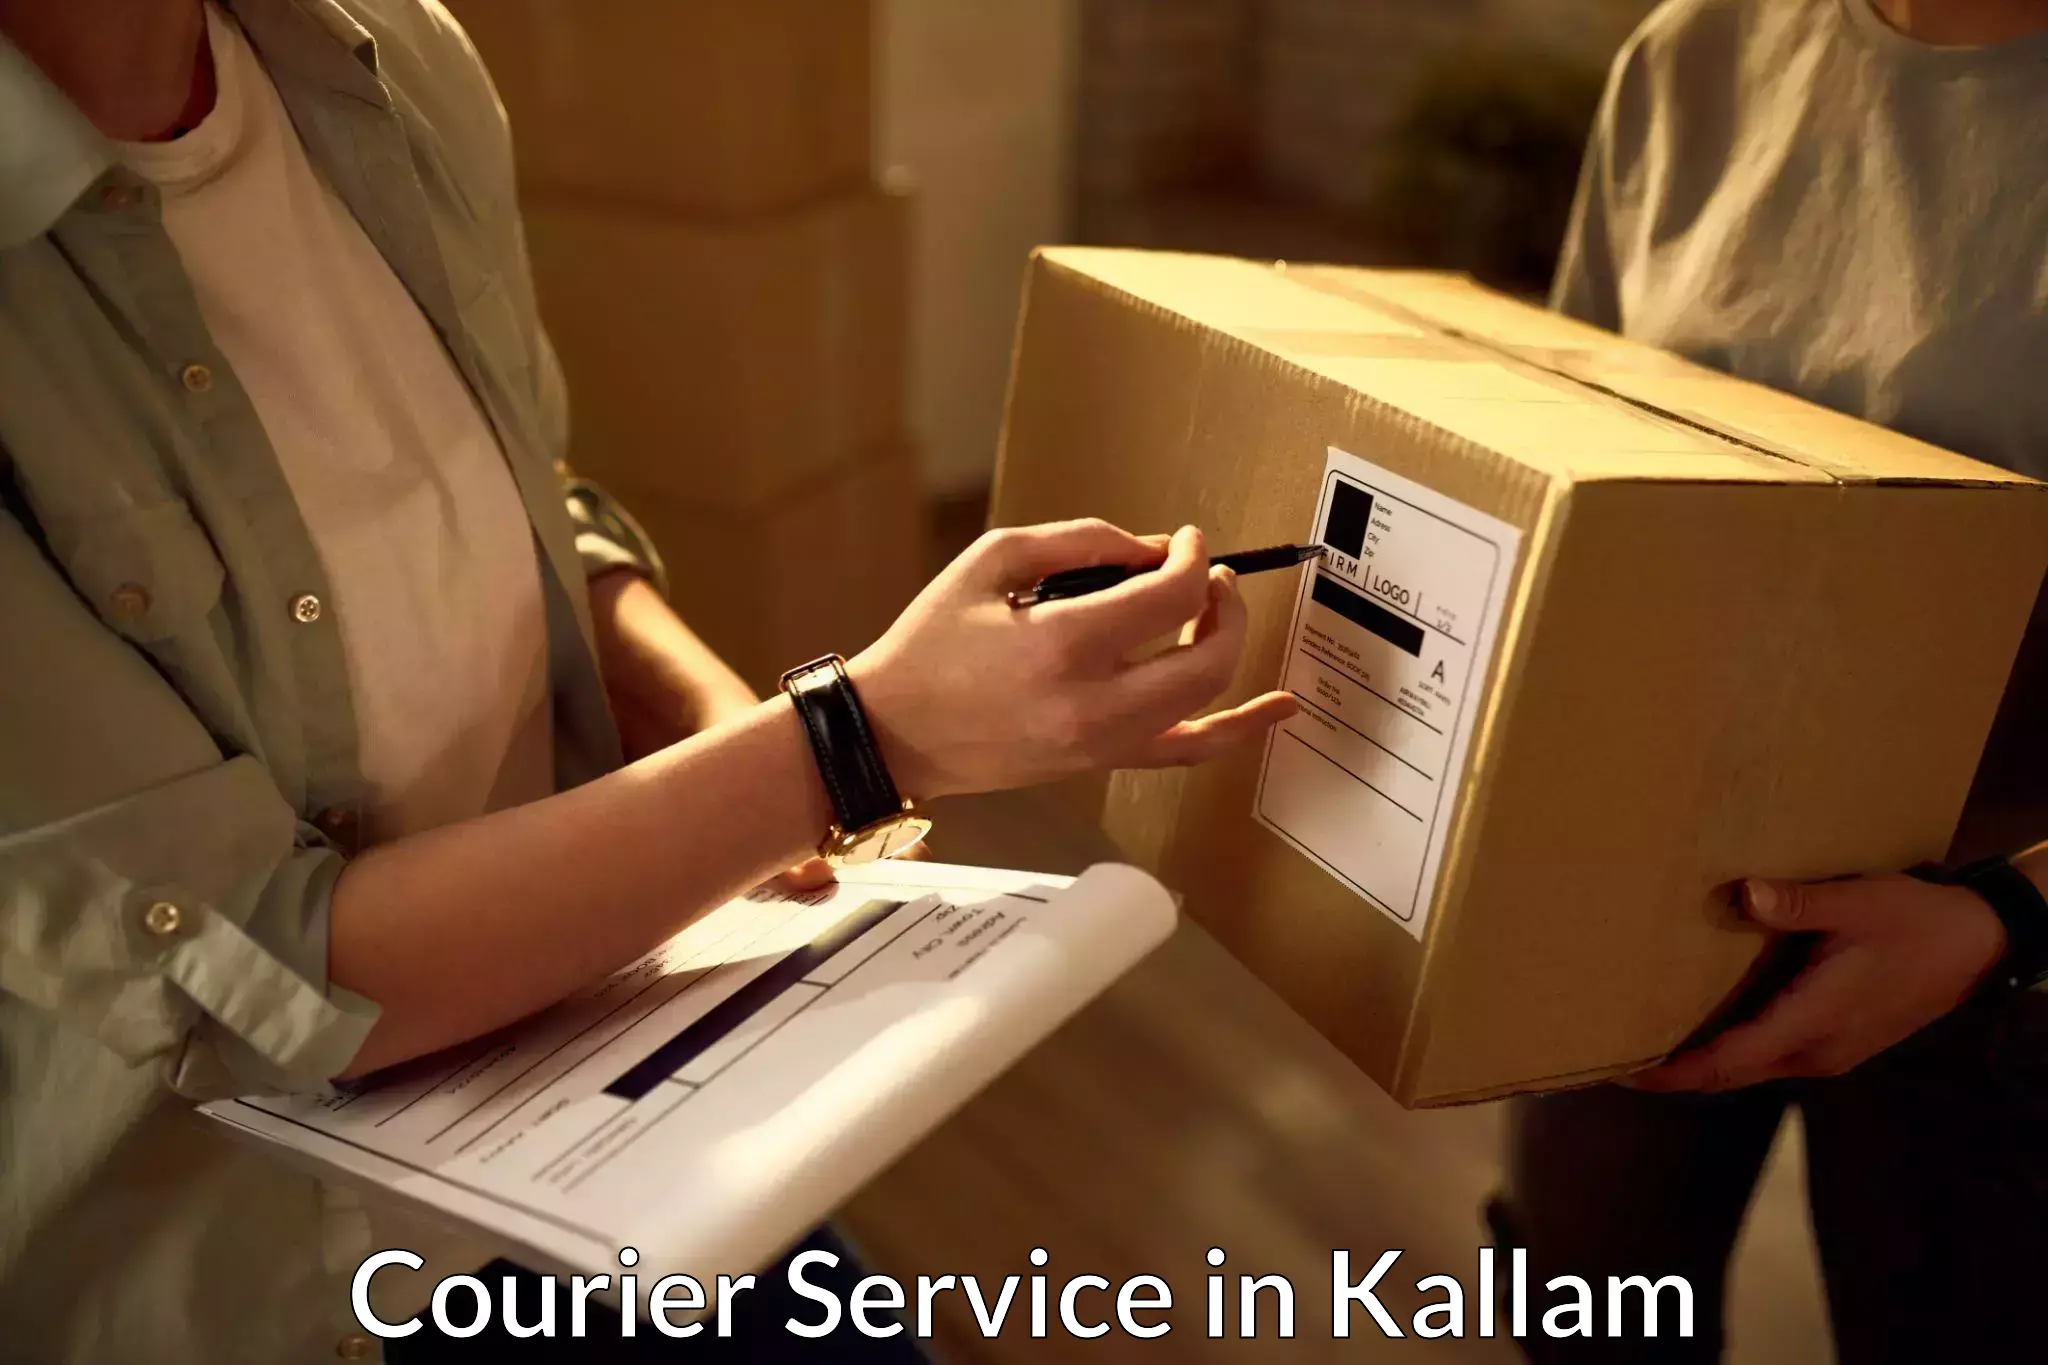 Cargo delivery service in Kallam